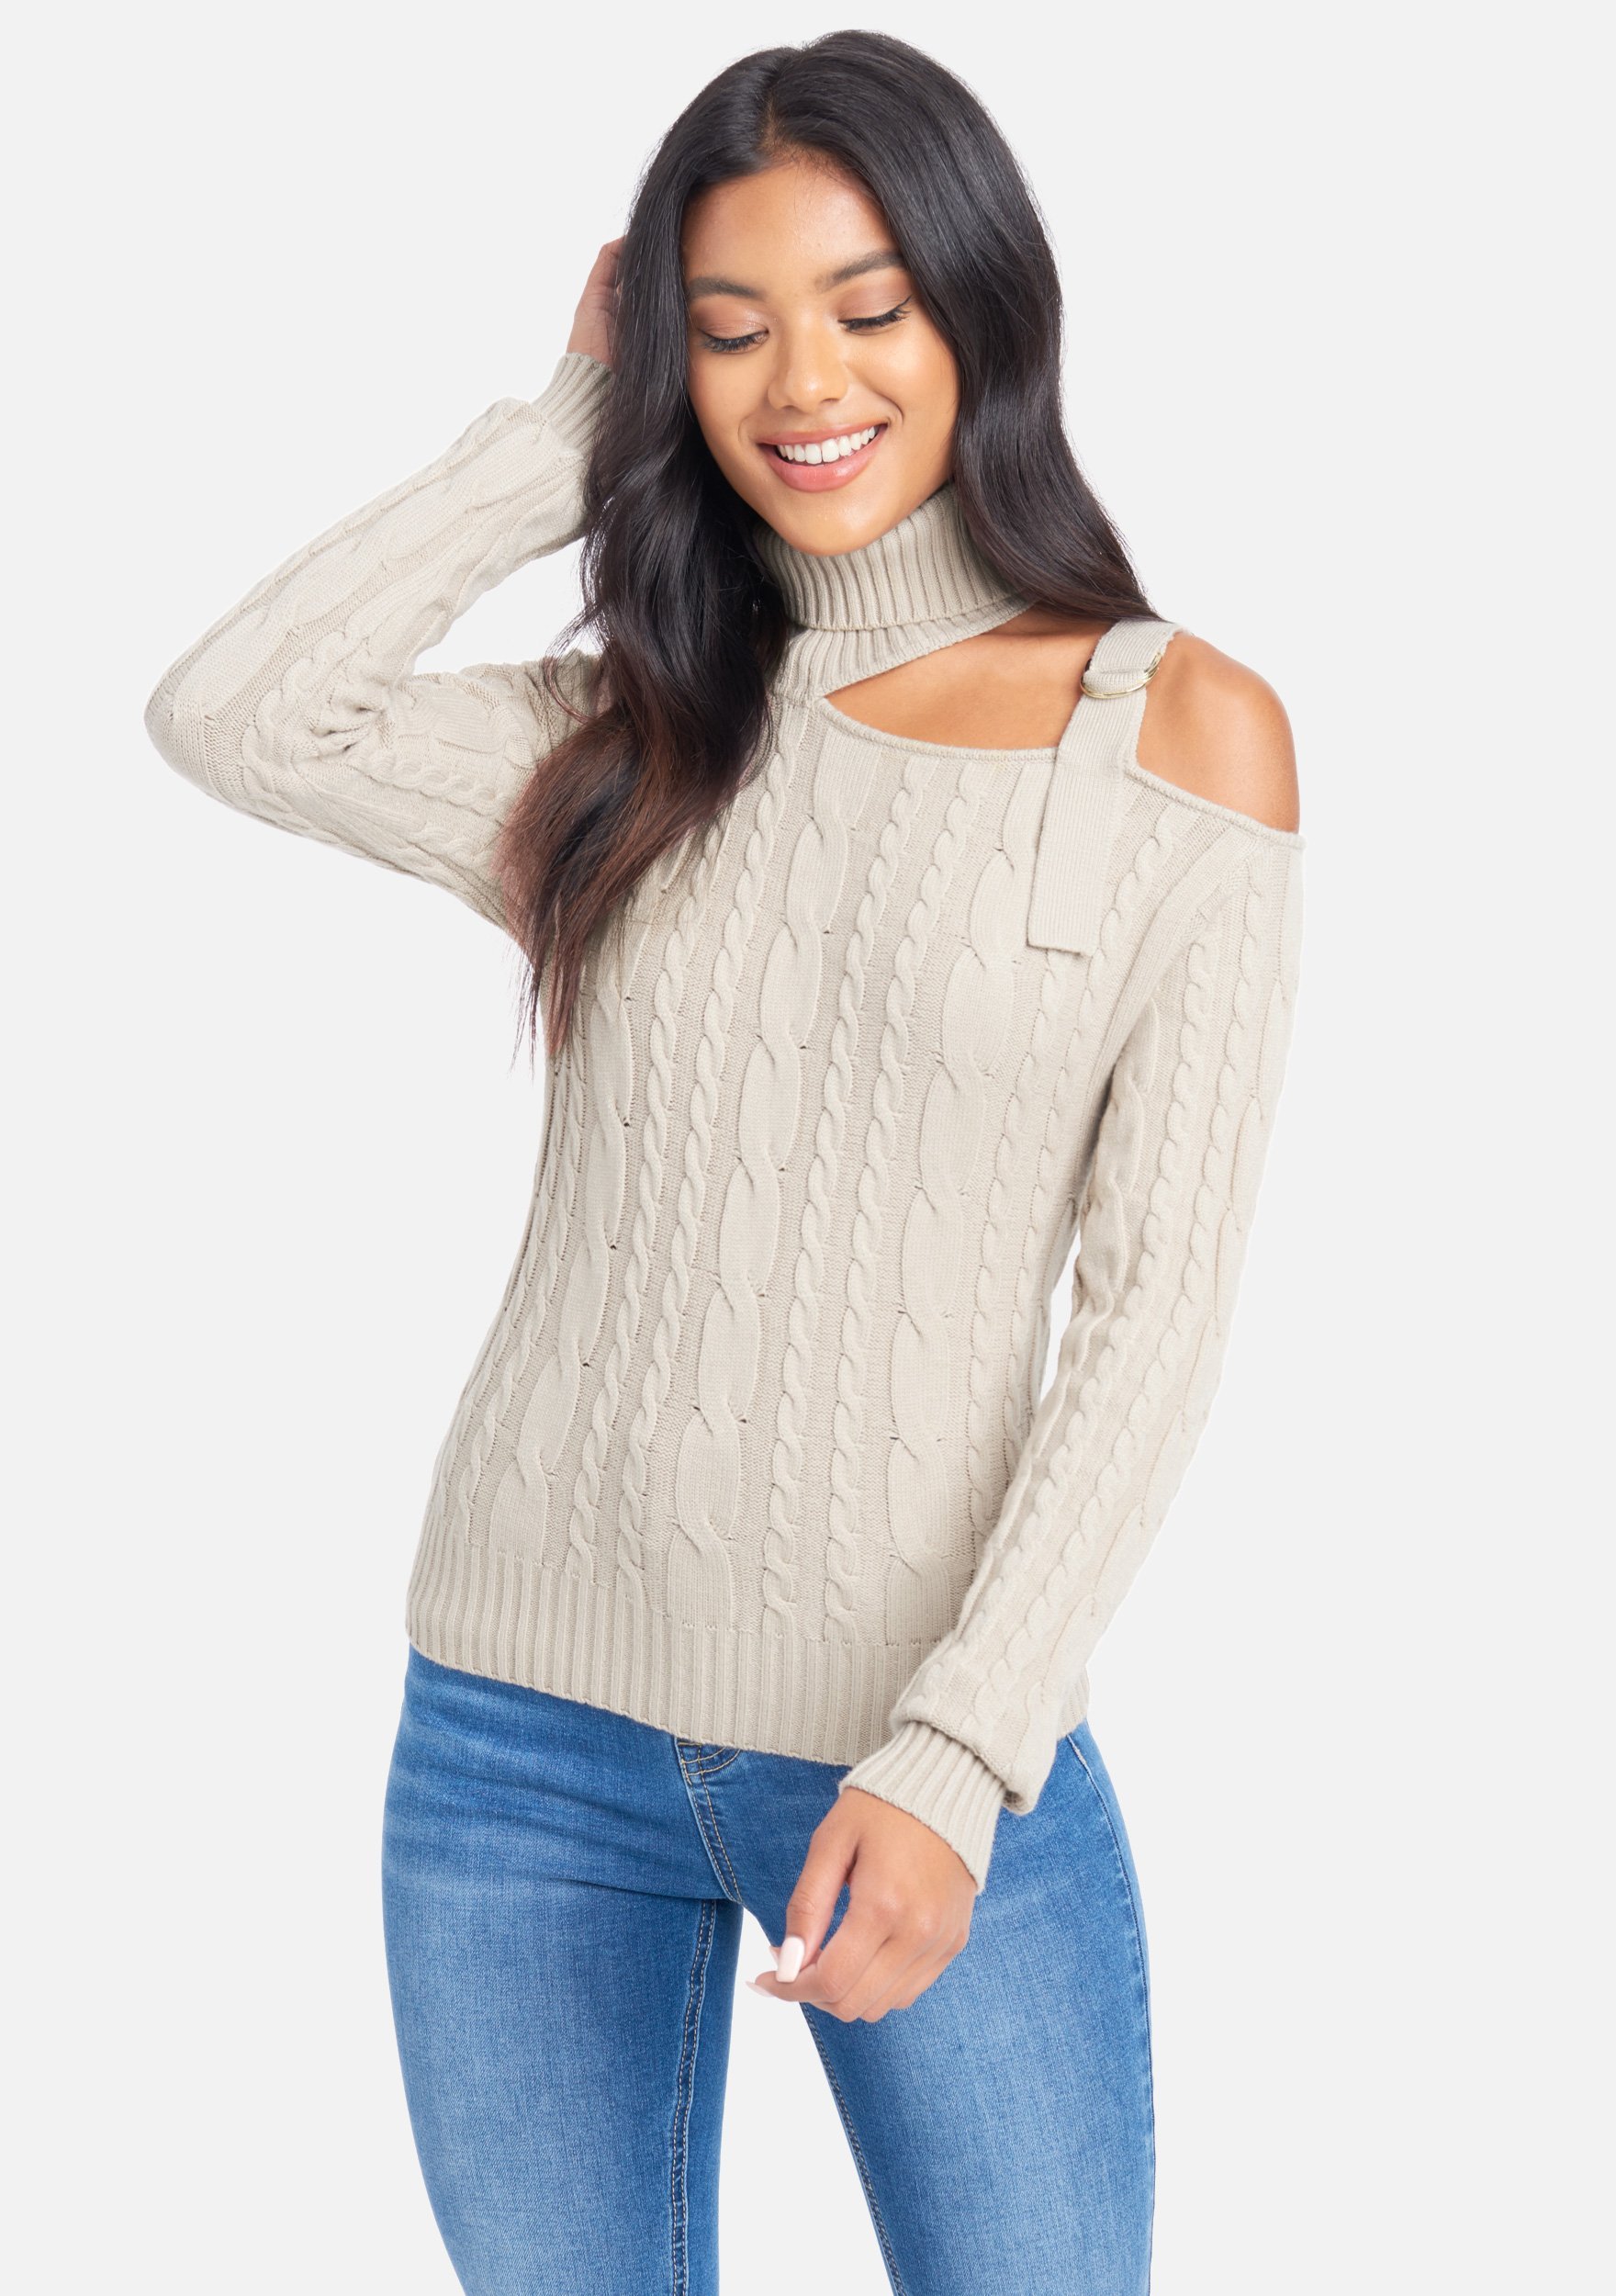 Bebe Women's Mock Neck Cut Out Sweater Top, Size Medium in Camel Heather Spandex/Nylon